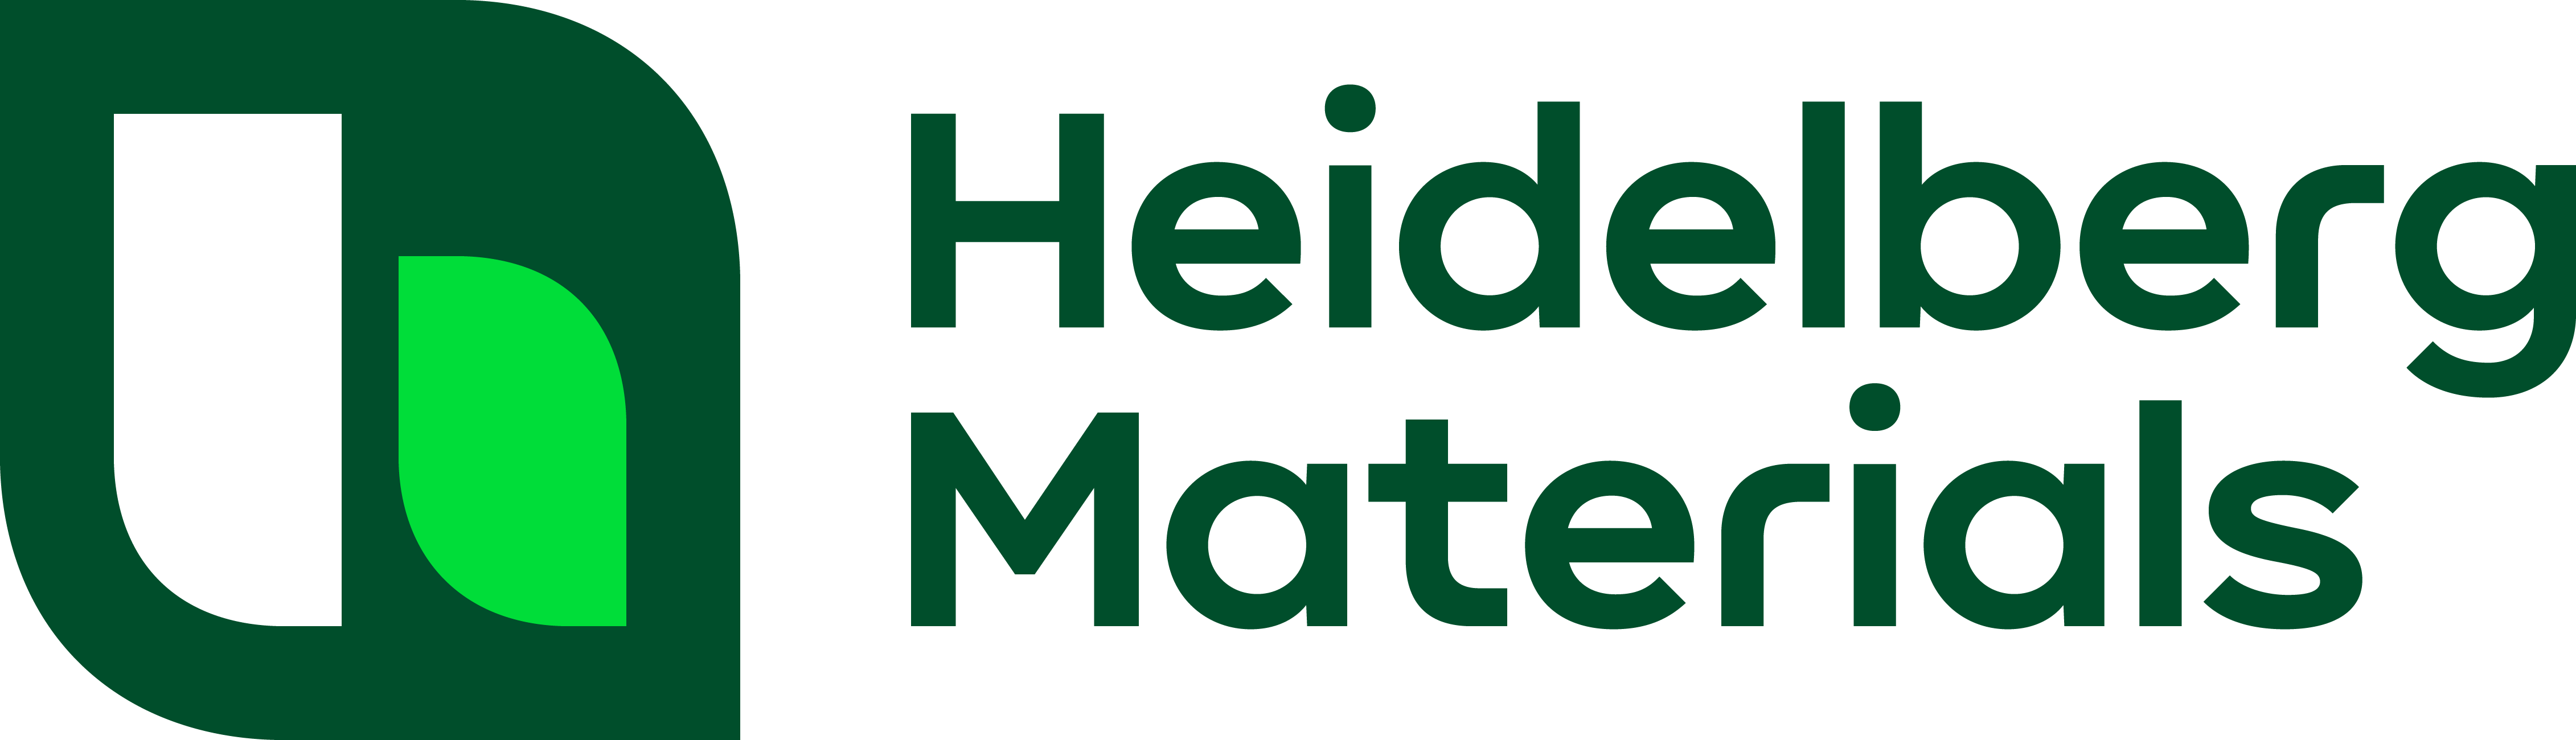 HeidelbergMaterials_Logo